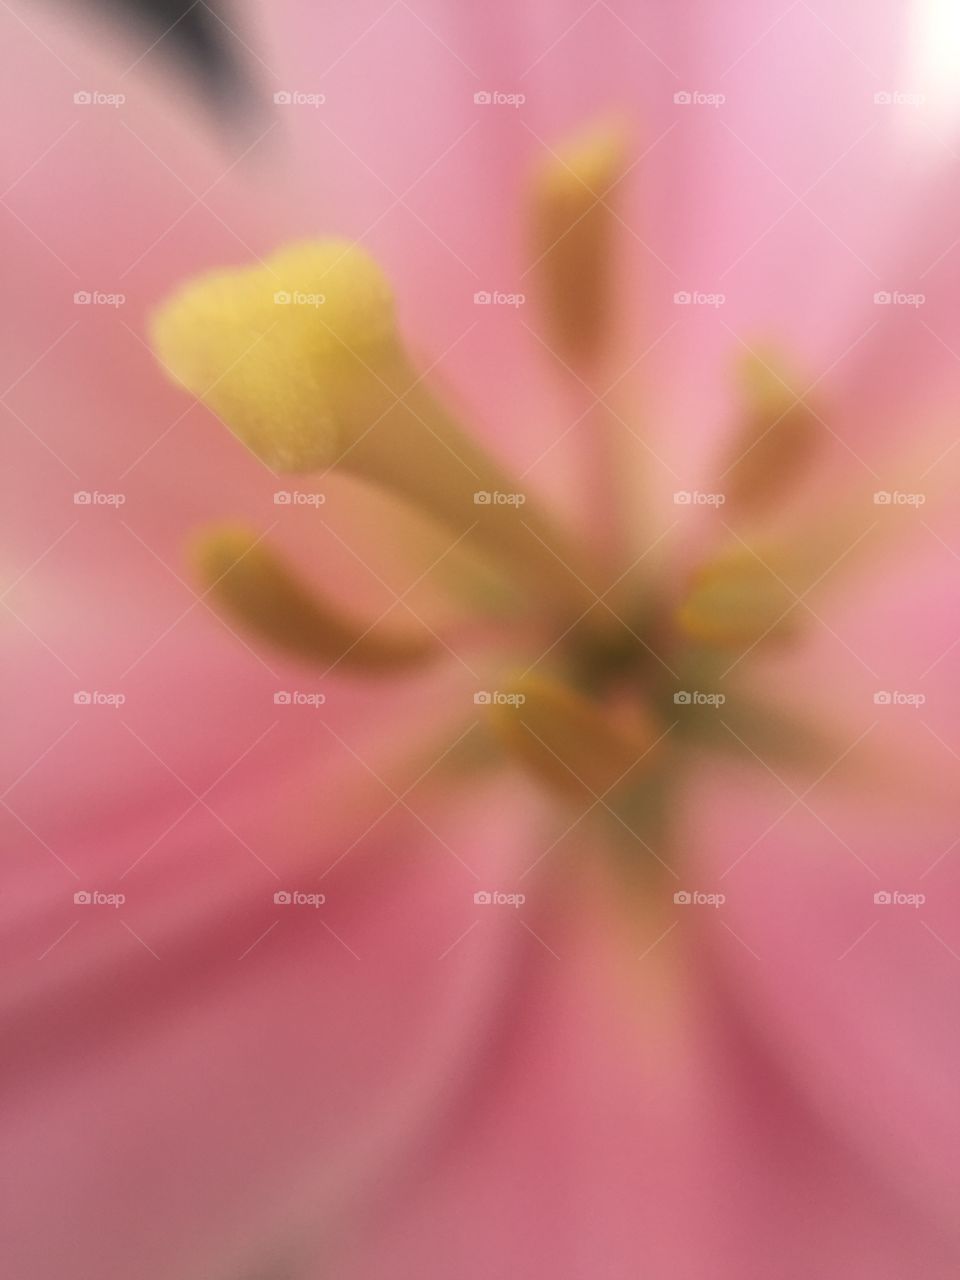 Inside a flower close up